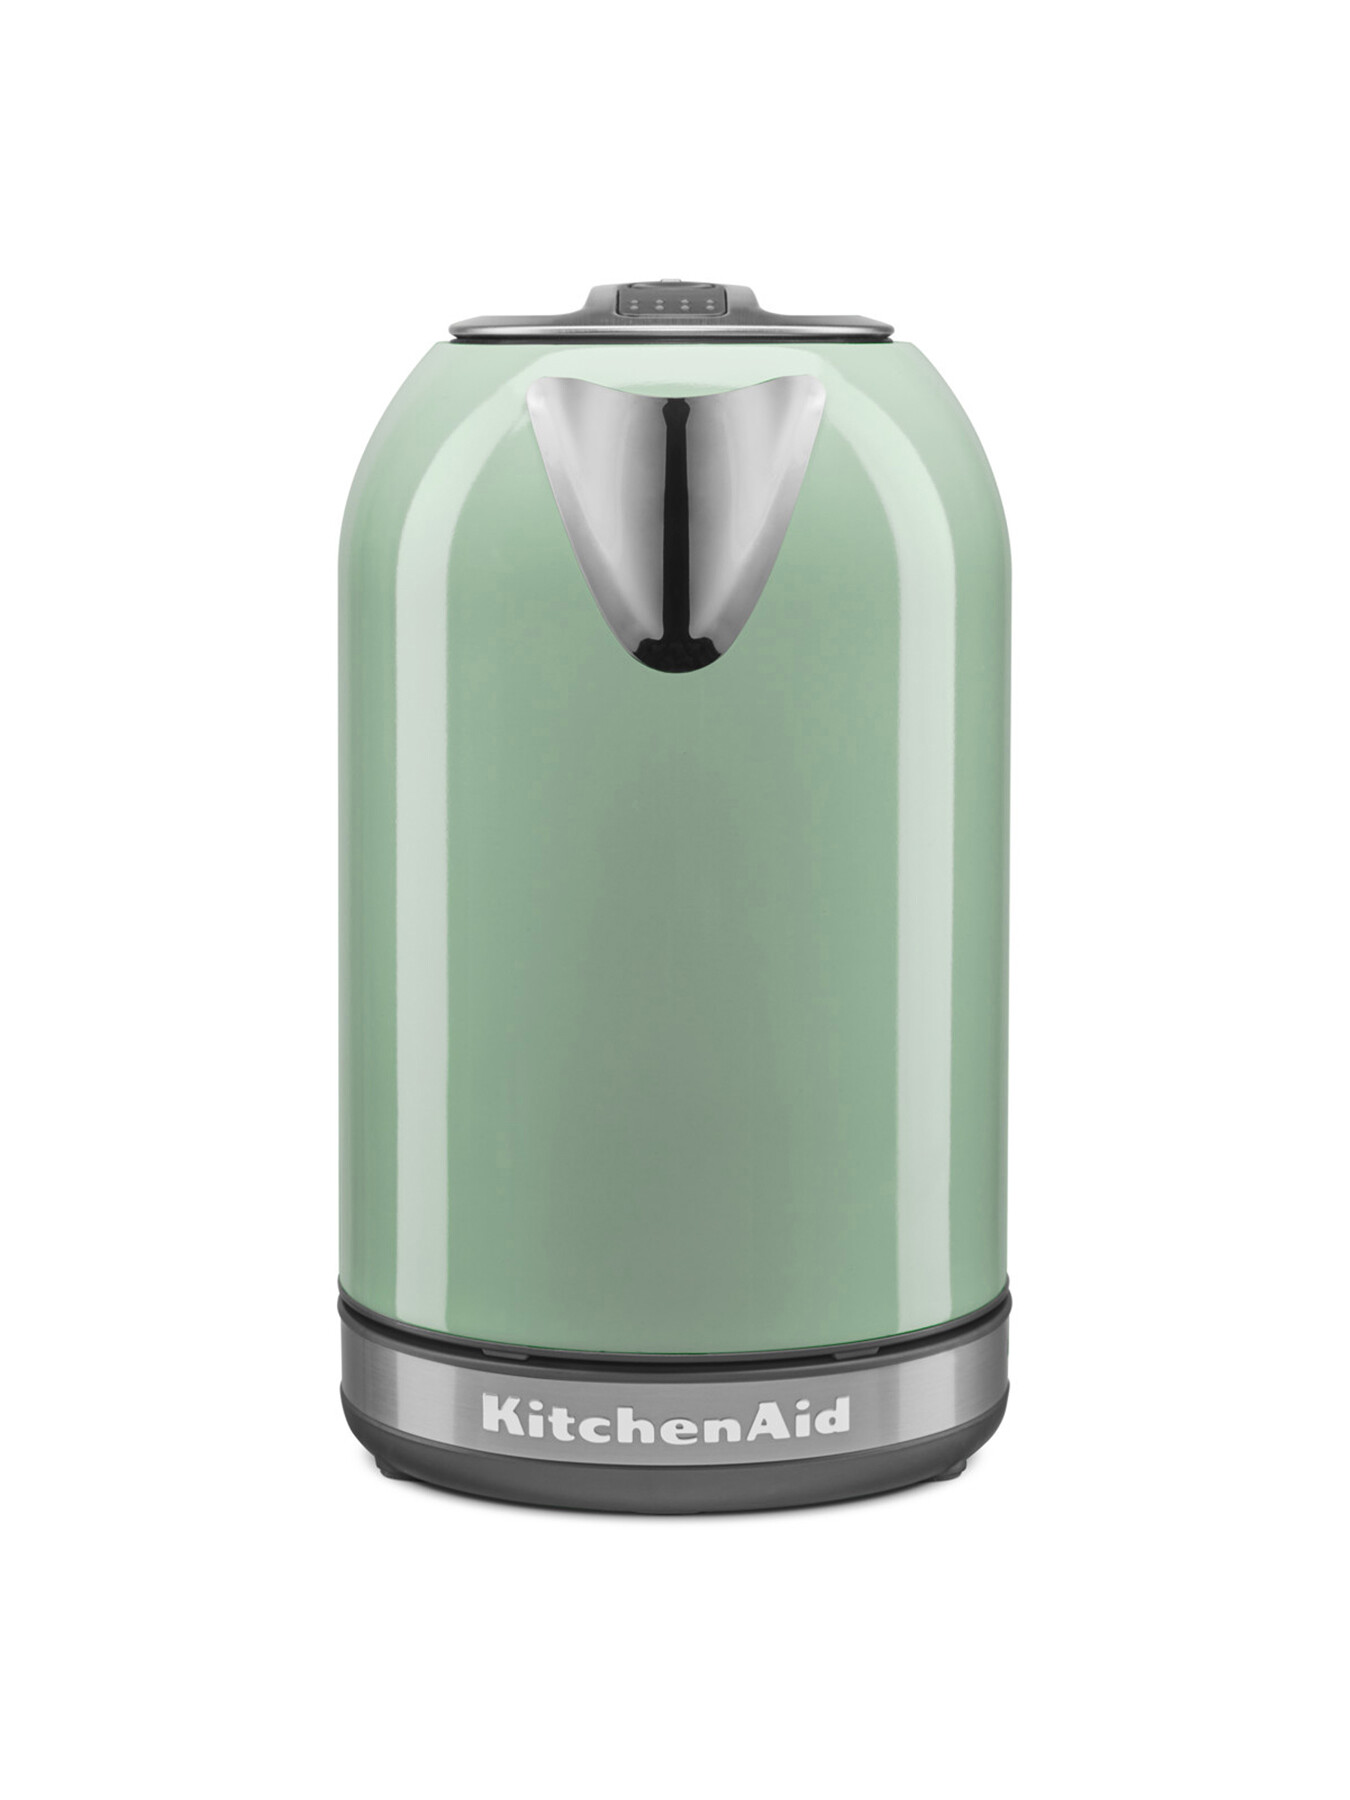 KitchenAid KEK1722 1.7-Liter Electric Kettle with LED Display